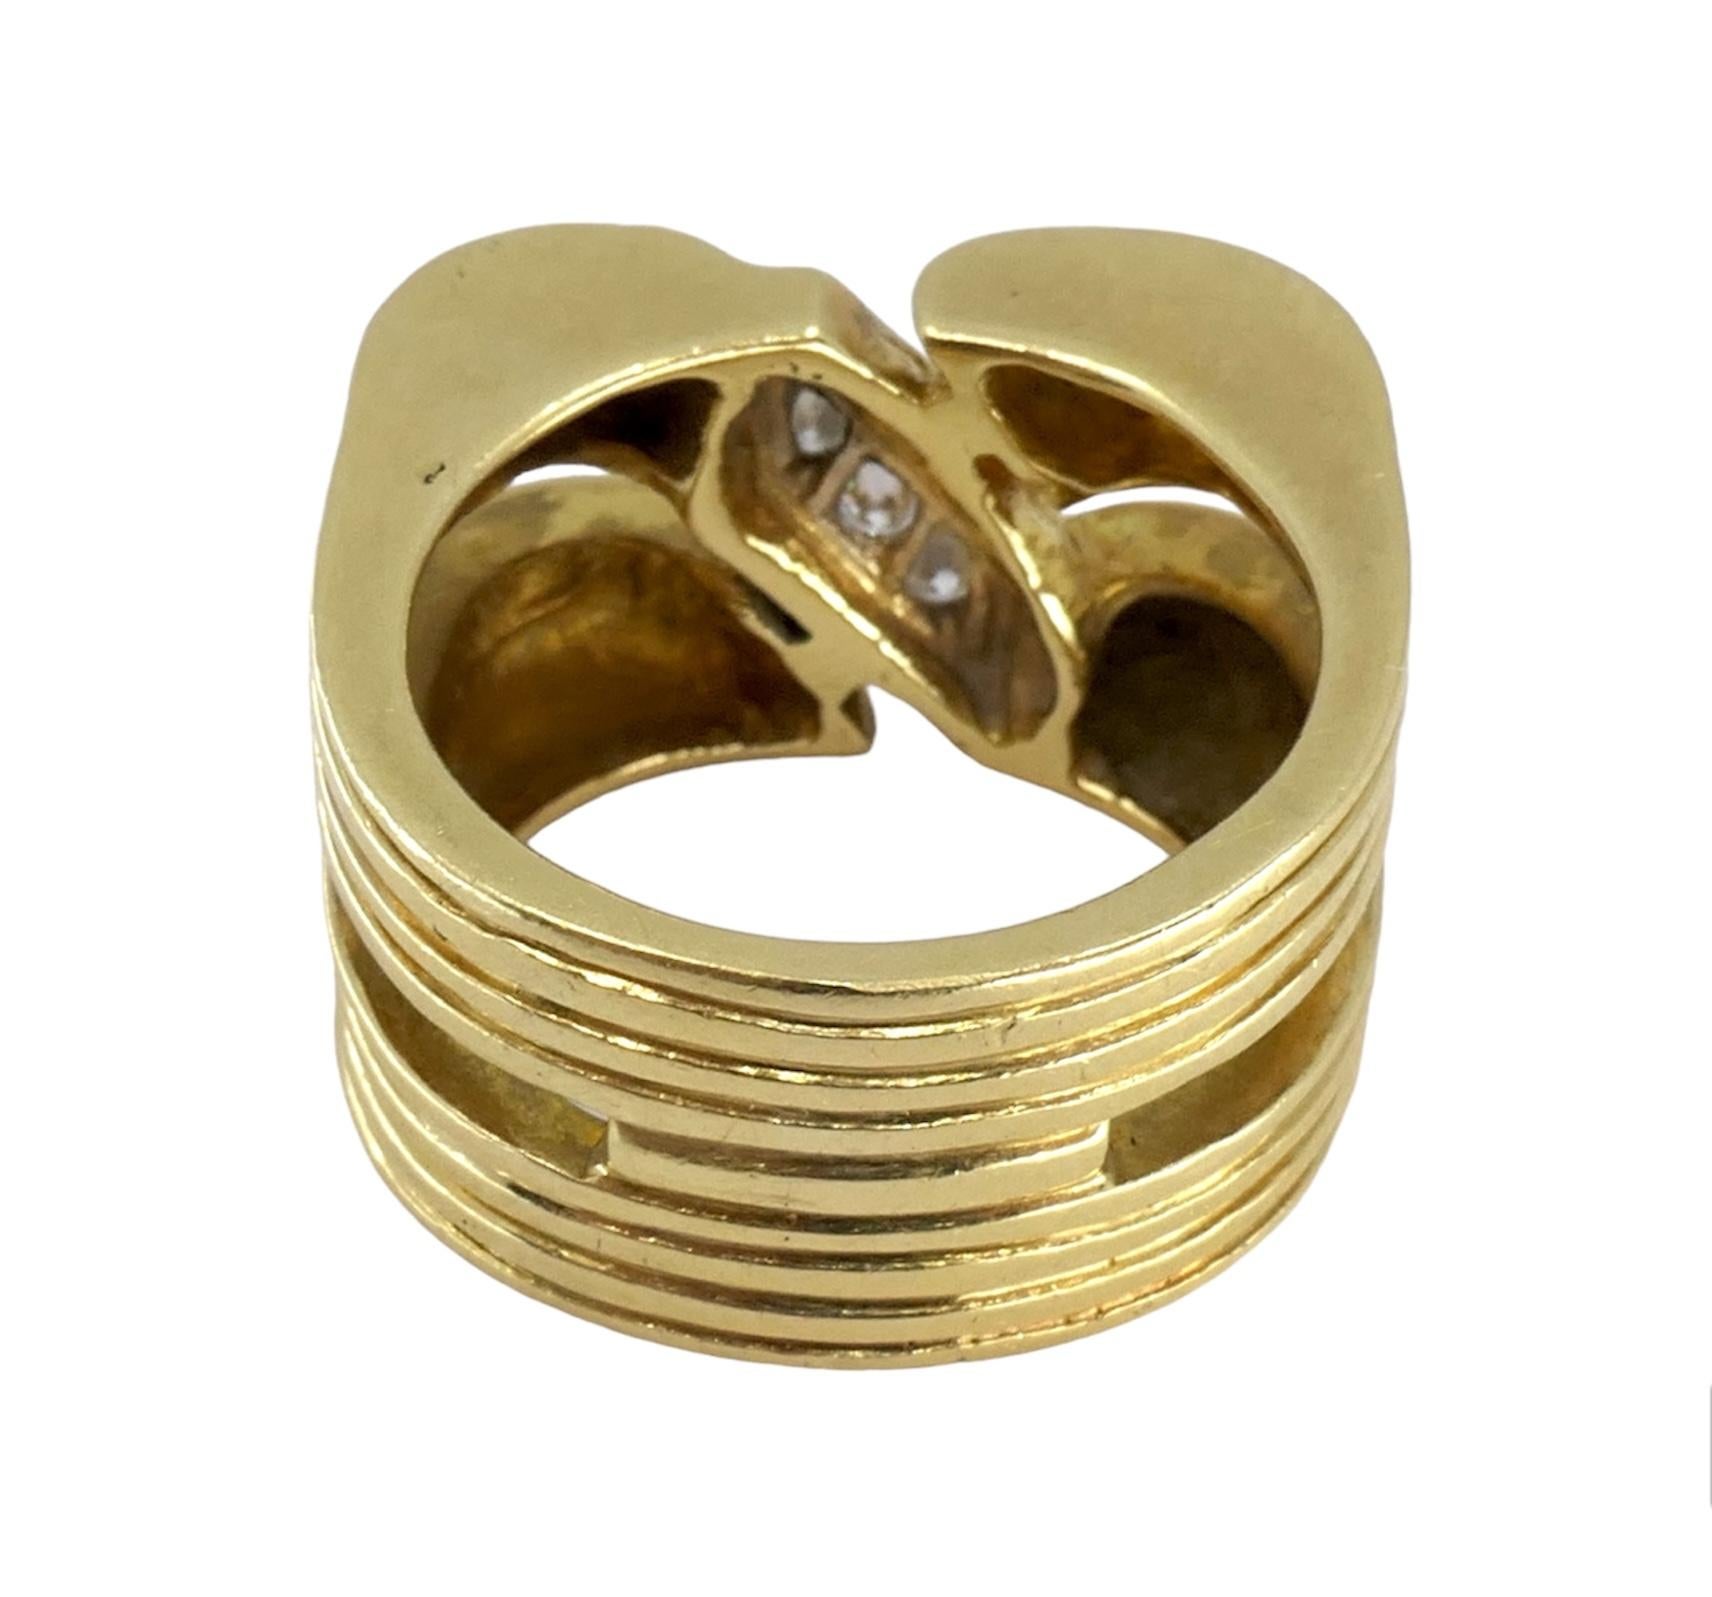 Vintage Tiffany & Co. 18k Gold Diamond Tank Ring sz 7.5 For Sale 2